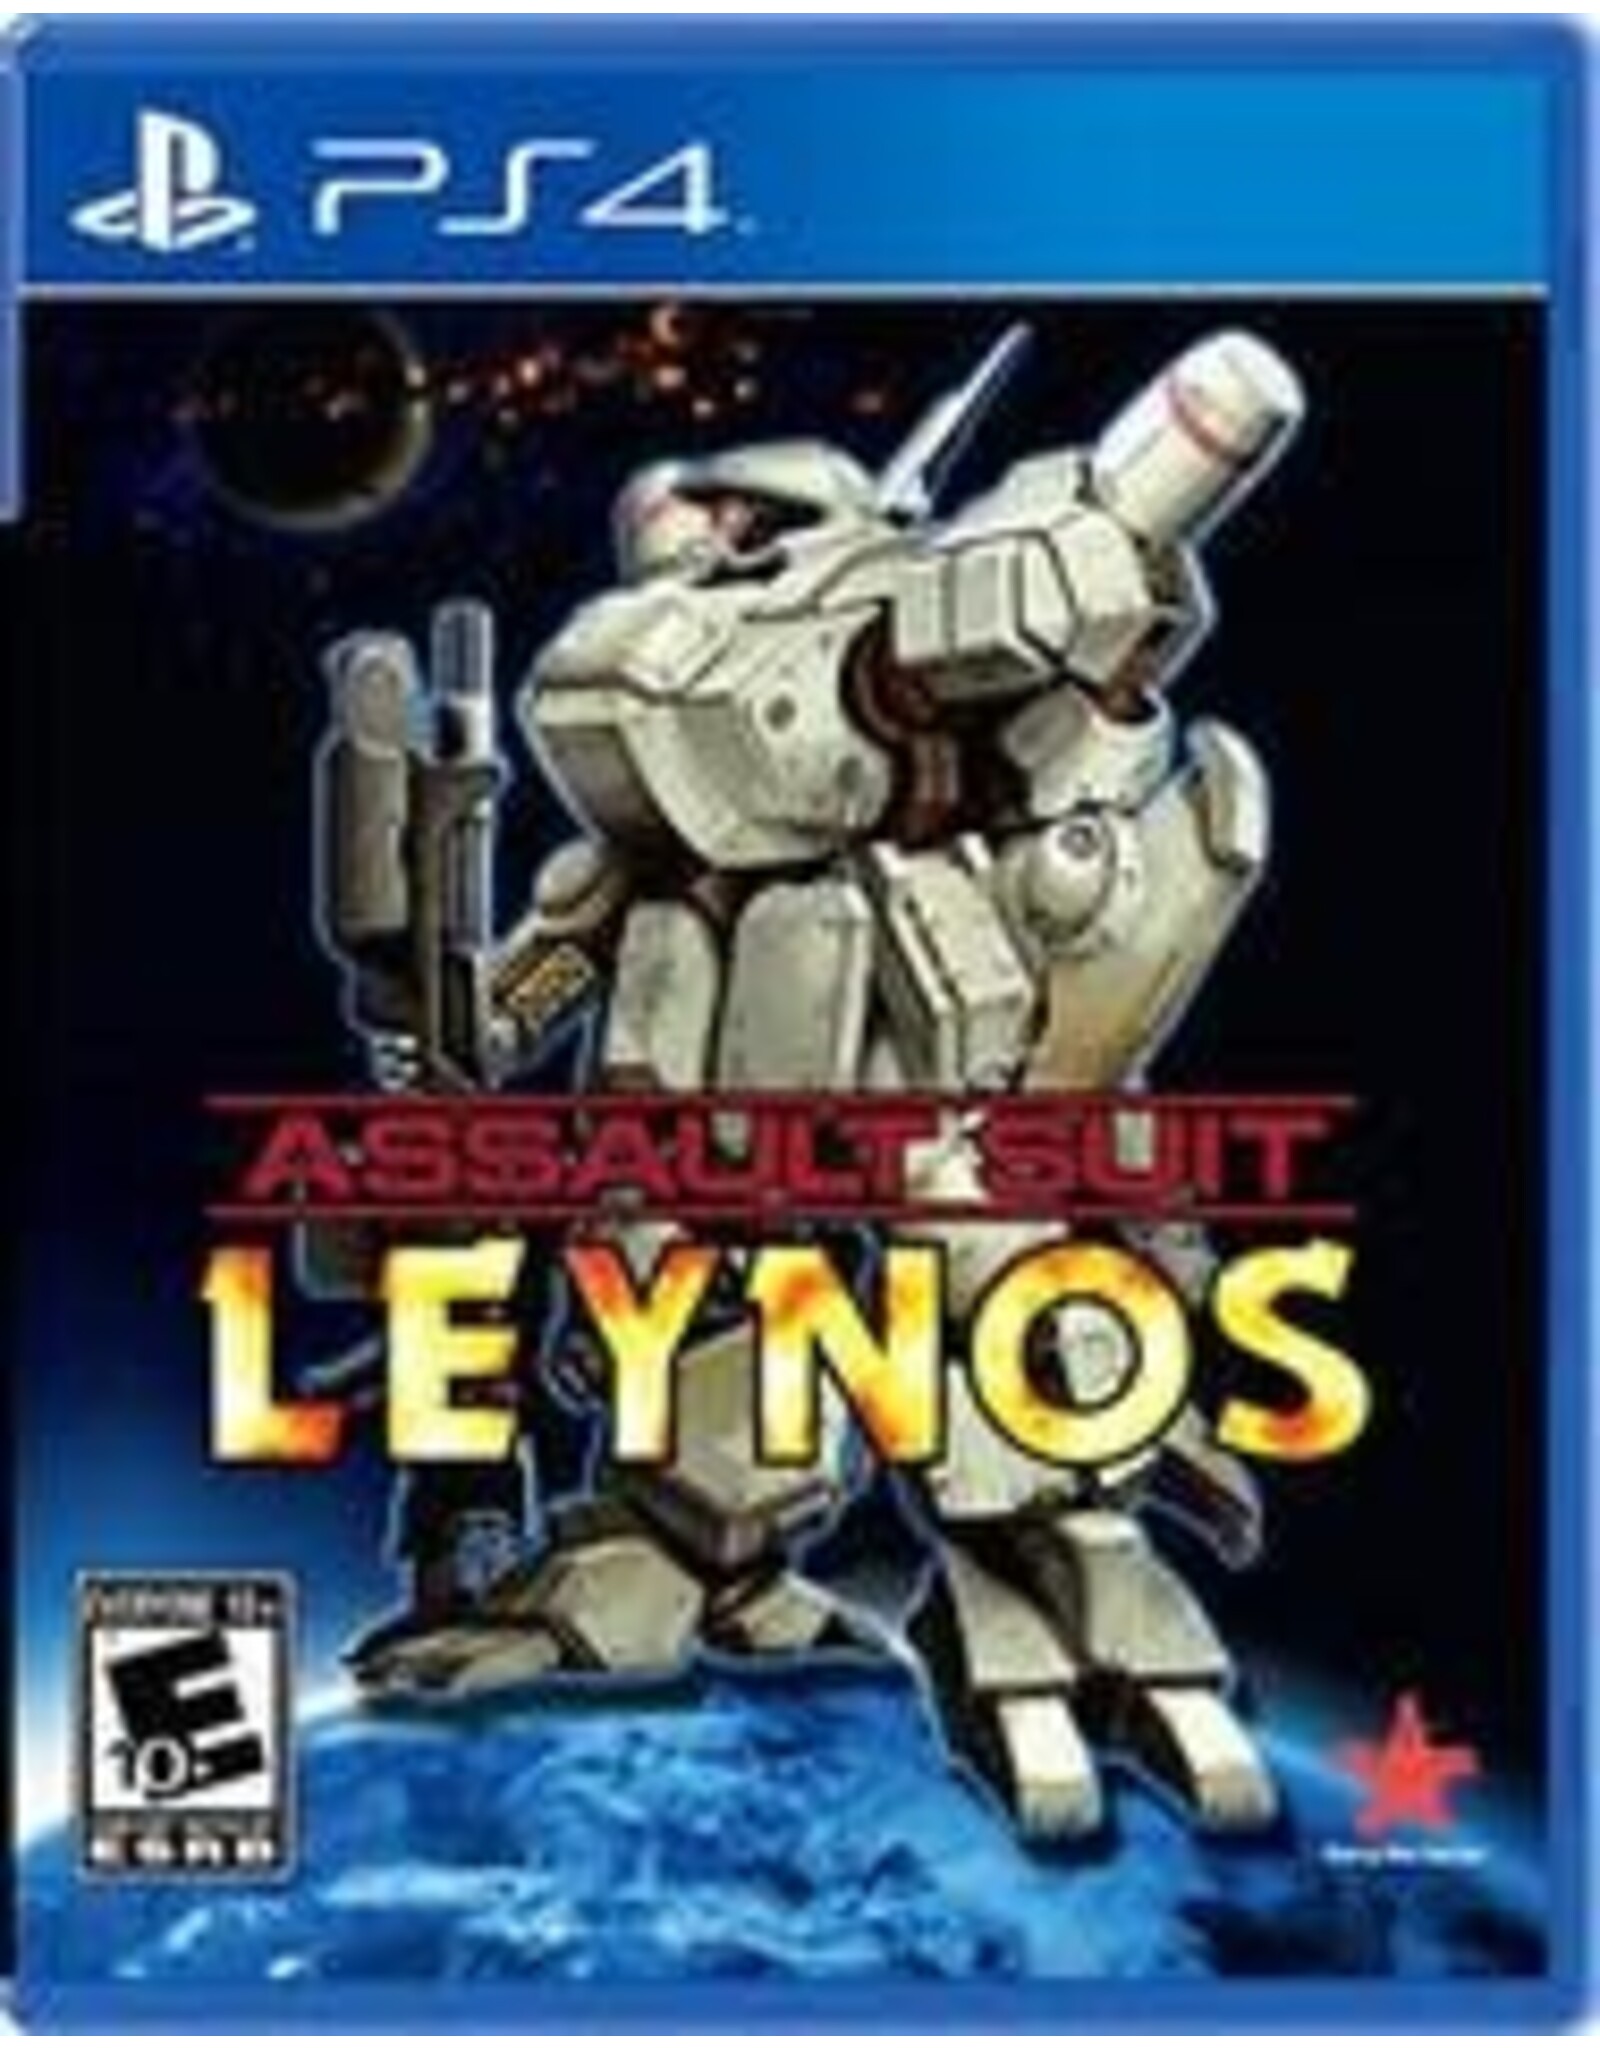 Playstation 4 Assault Suit Leynos (CiB)